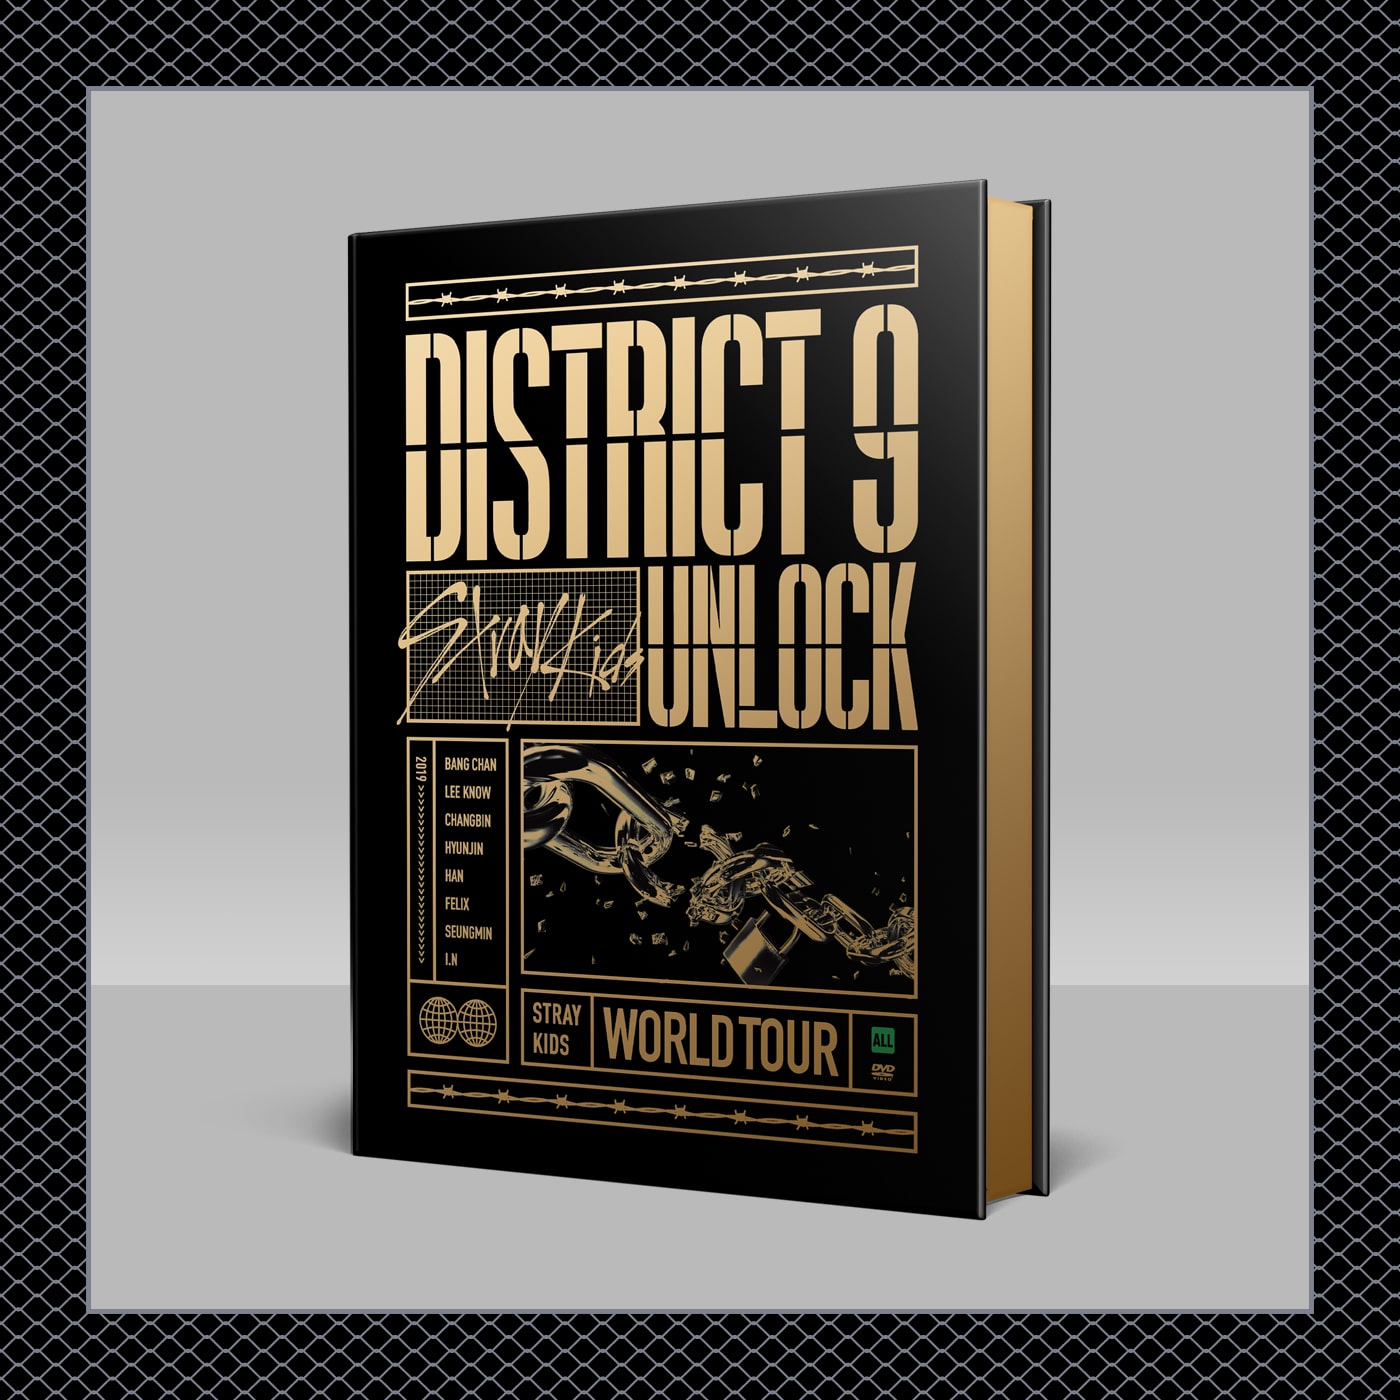 Stray Kids Stray Kids World Tour 'District 9 : Unlock' in SEOUL DVD 🇰🇷